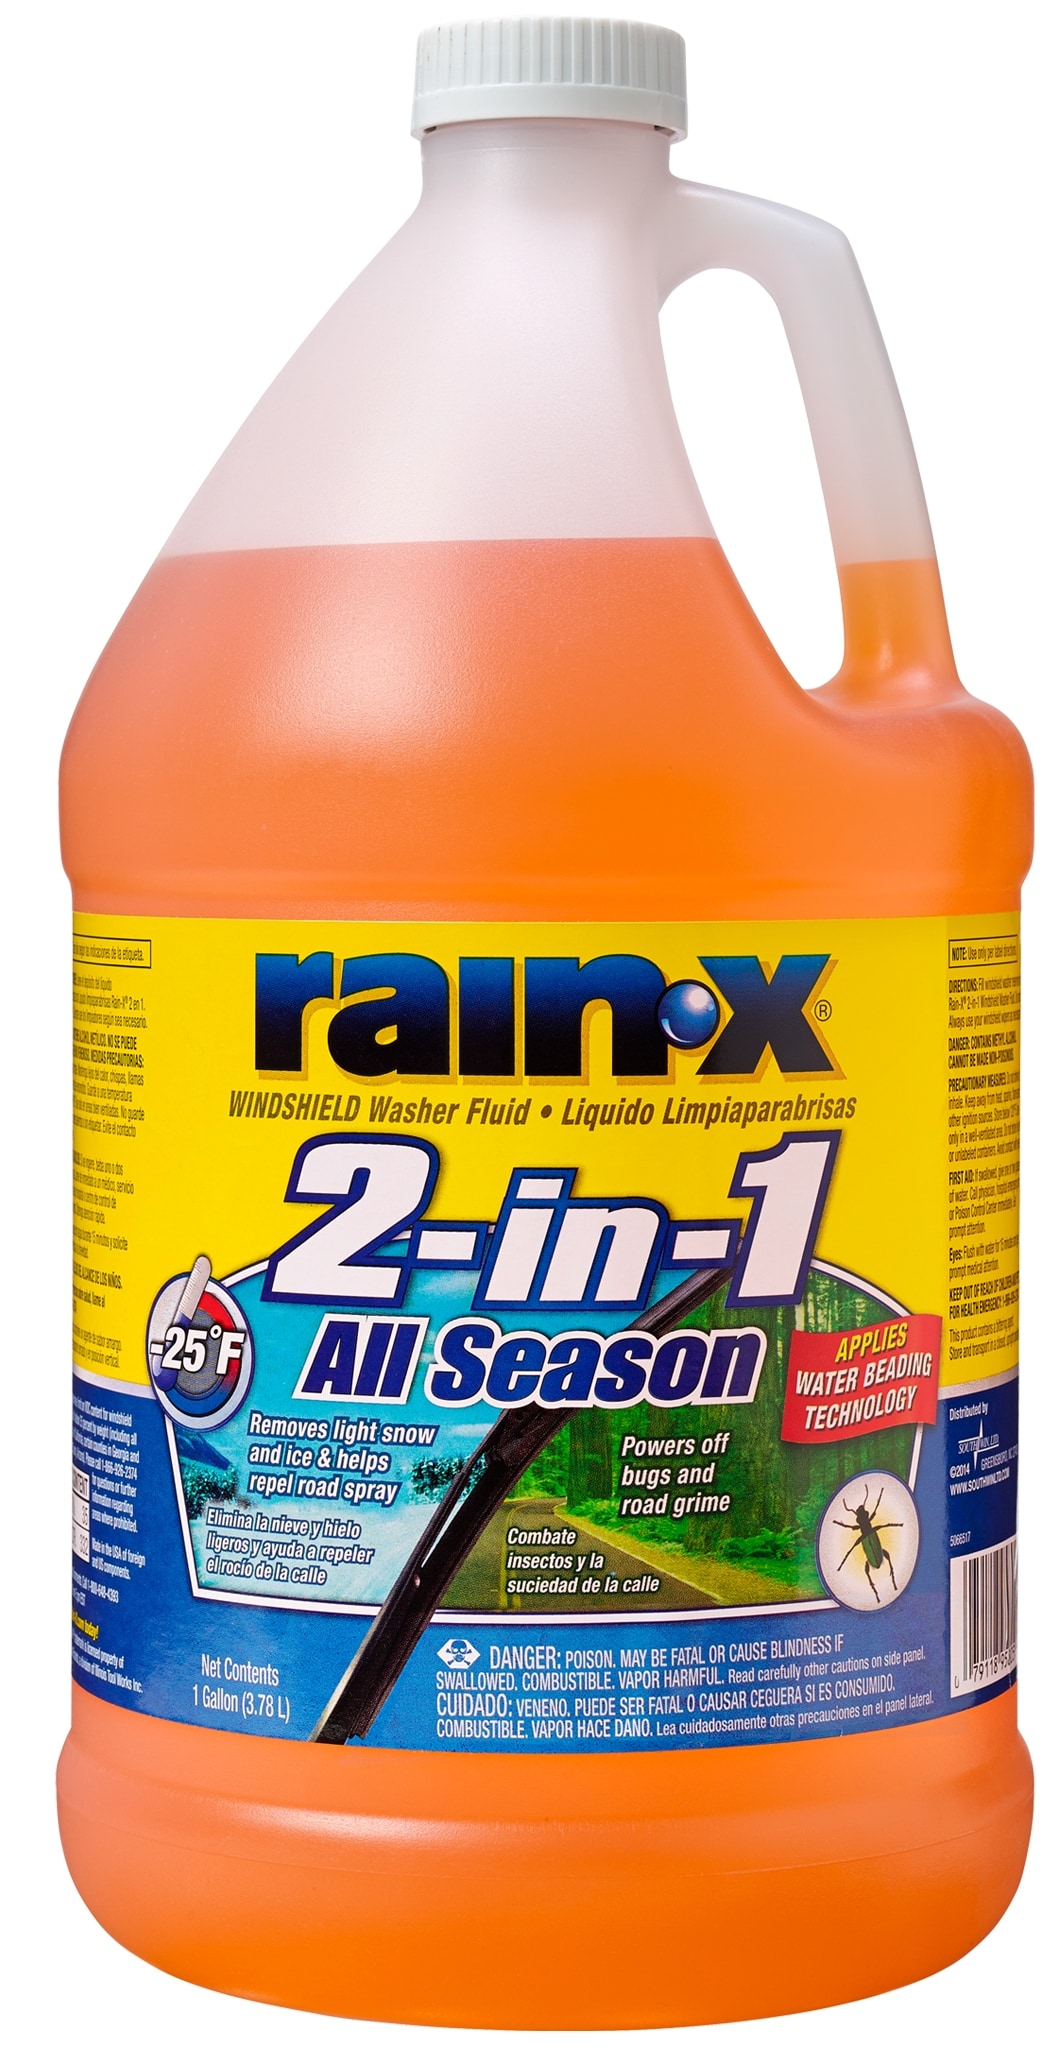 RAIN X Windscreen 2 in 1 Glass Cleaner & Rain Repellent Includes X2 CLOTHS